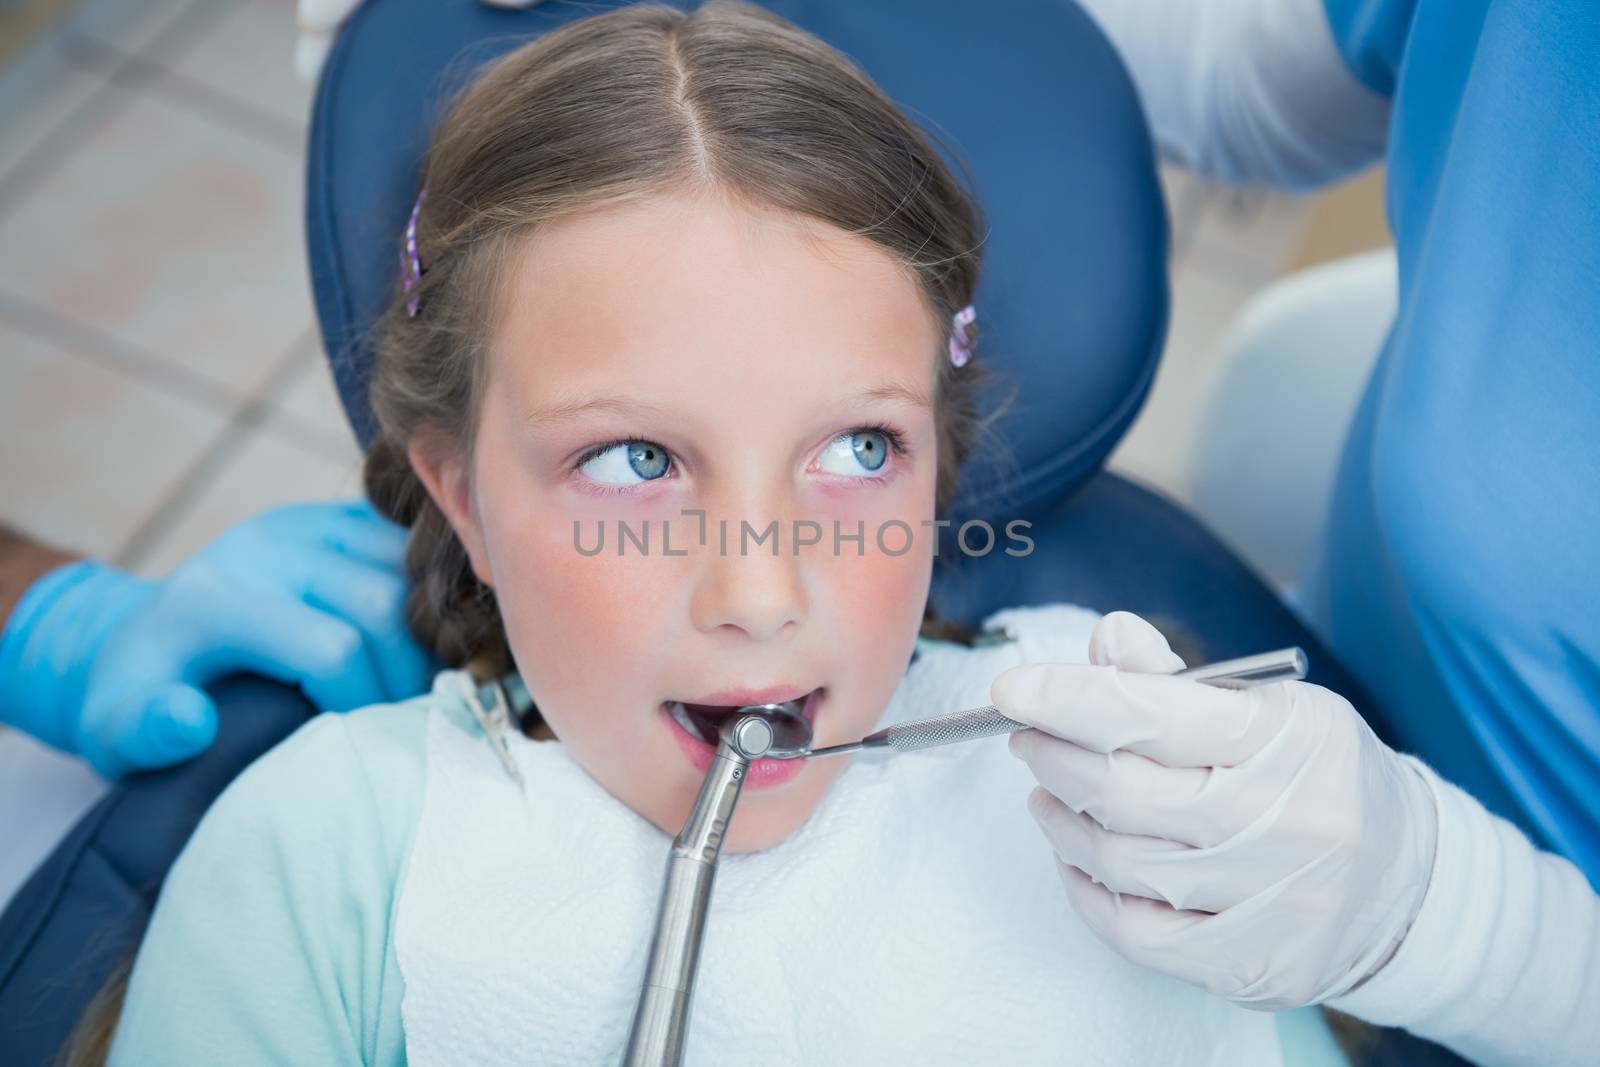 Dentist with assistant examining girls teeth by Wavebreakmedia